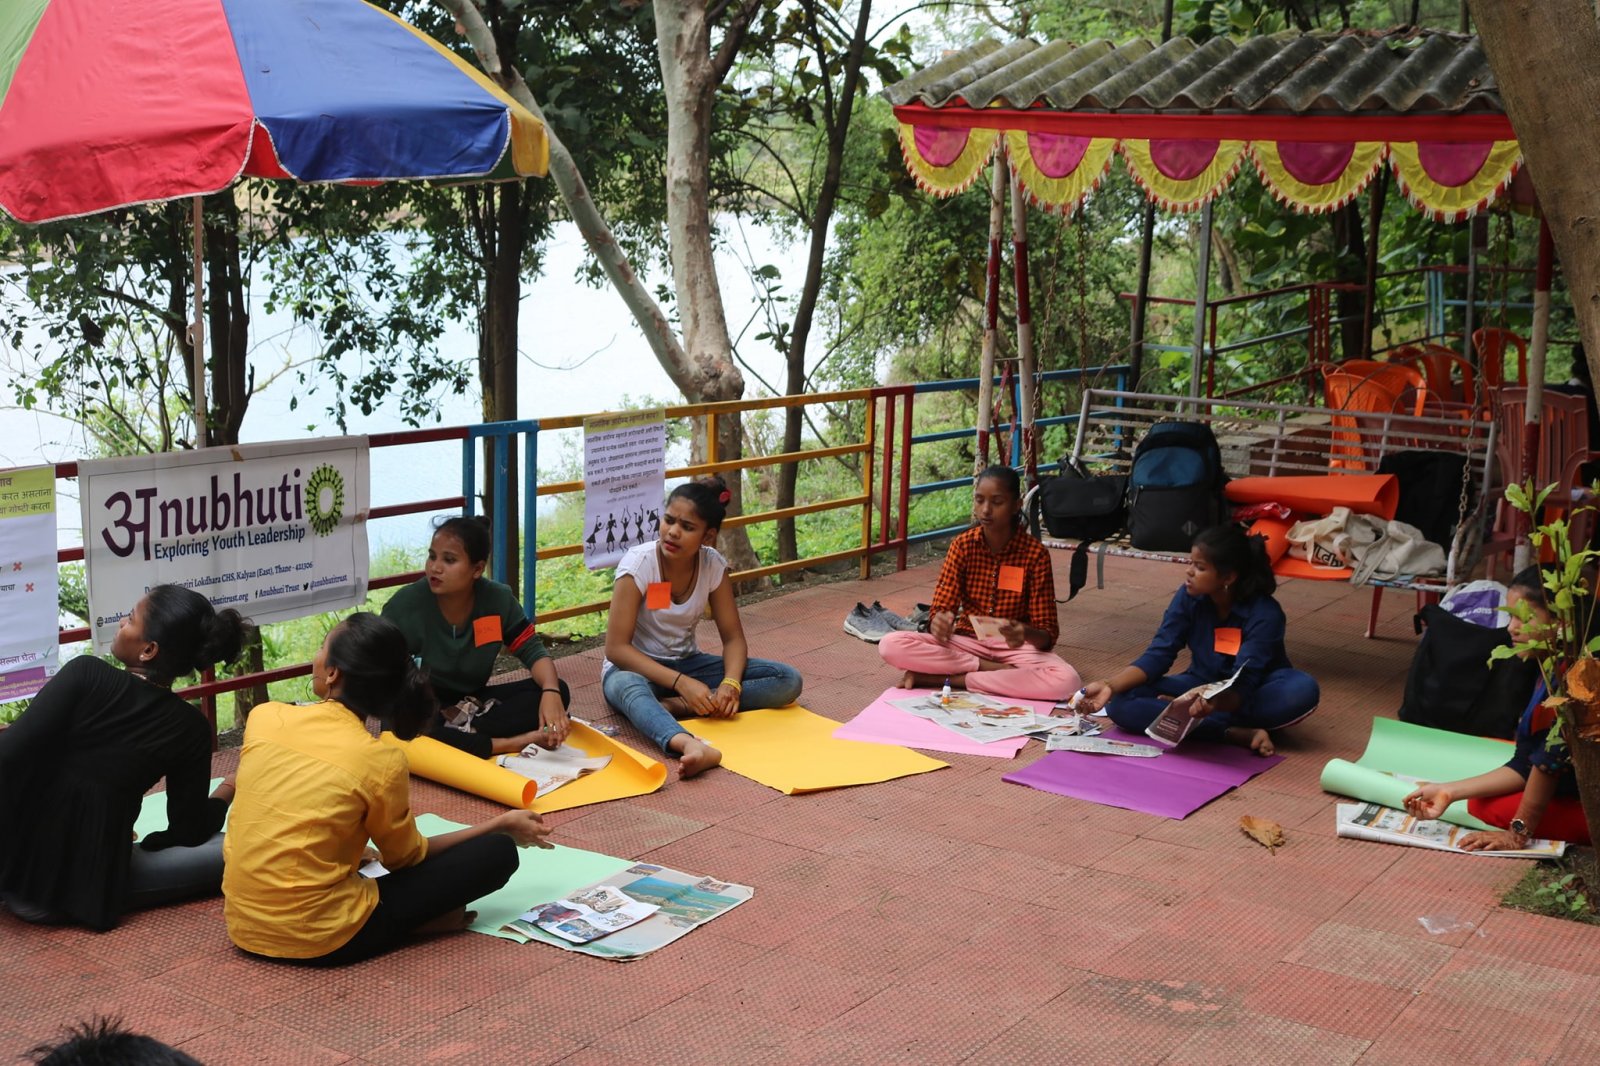 A group activity